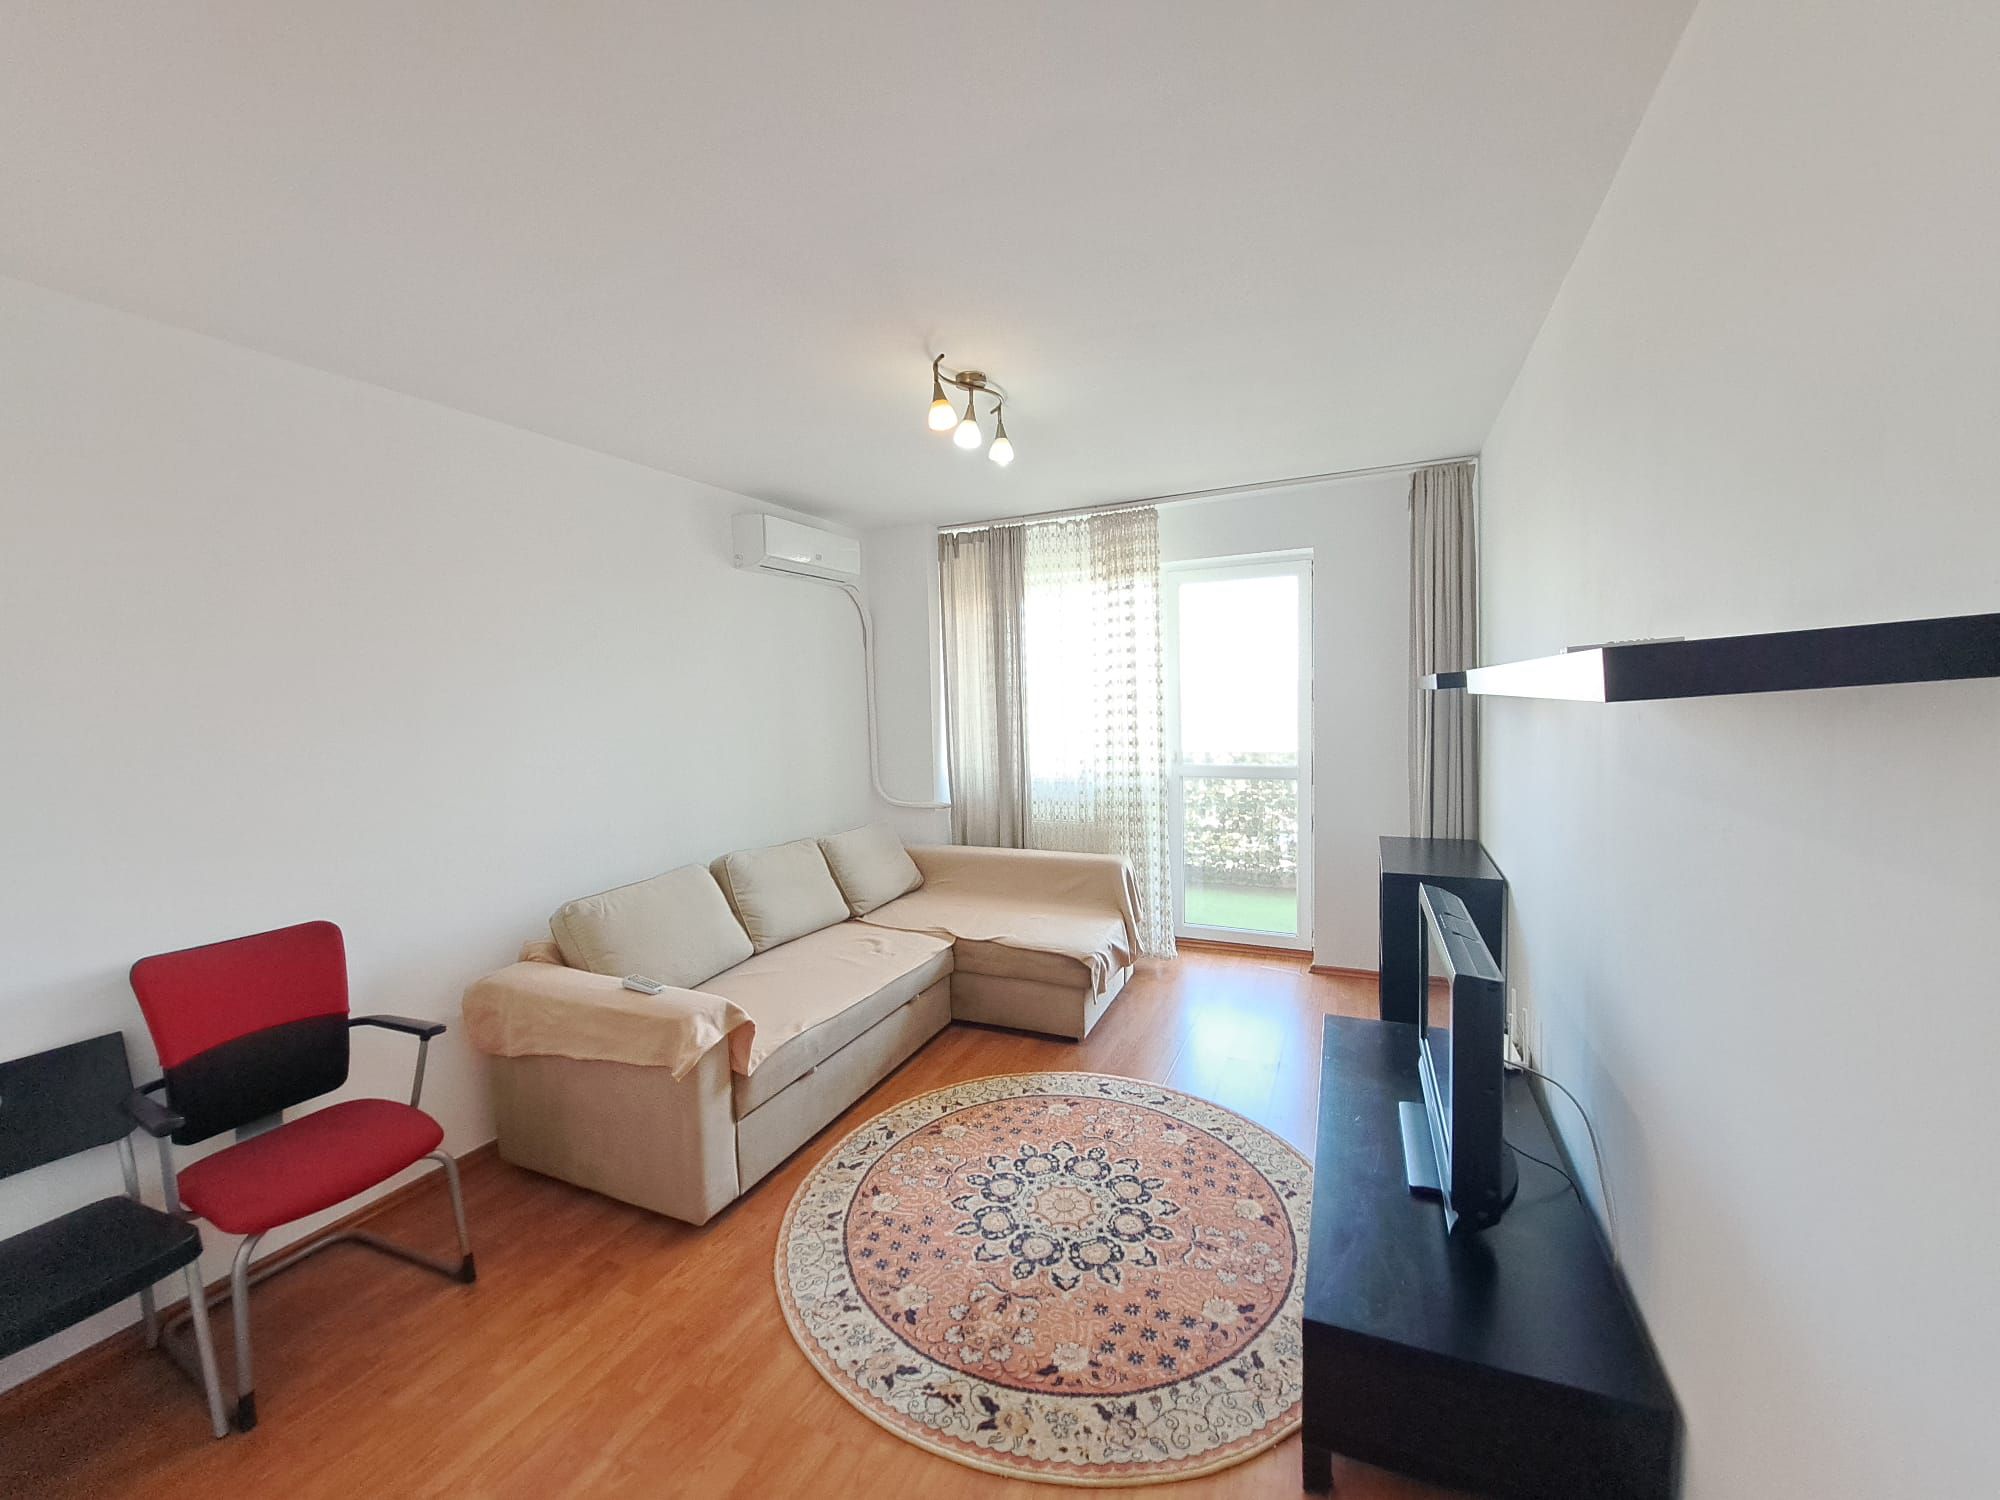 apartament cu 2 camere 65,67 mp - vitan barzesti Bucuresti